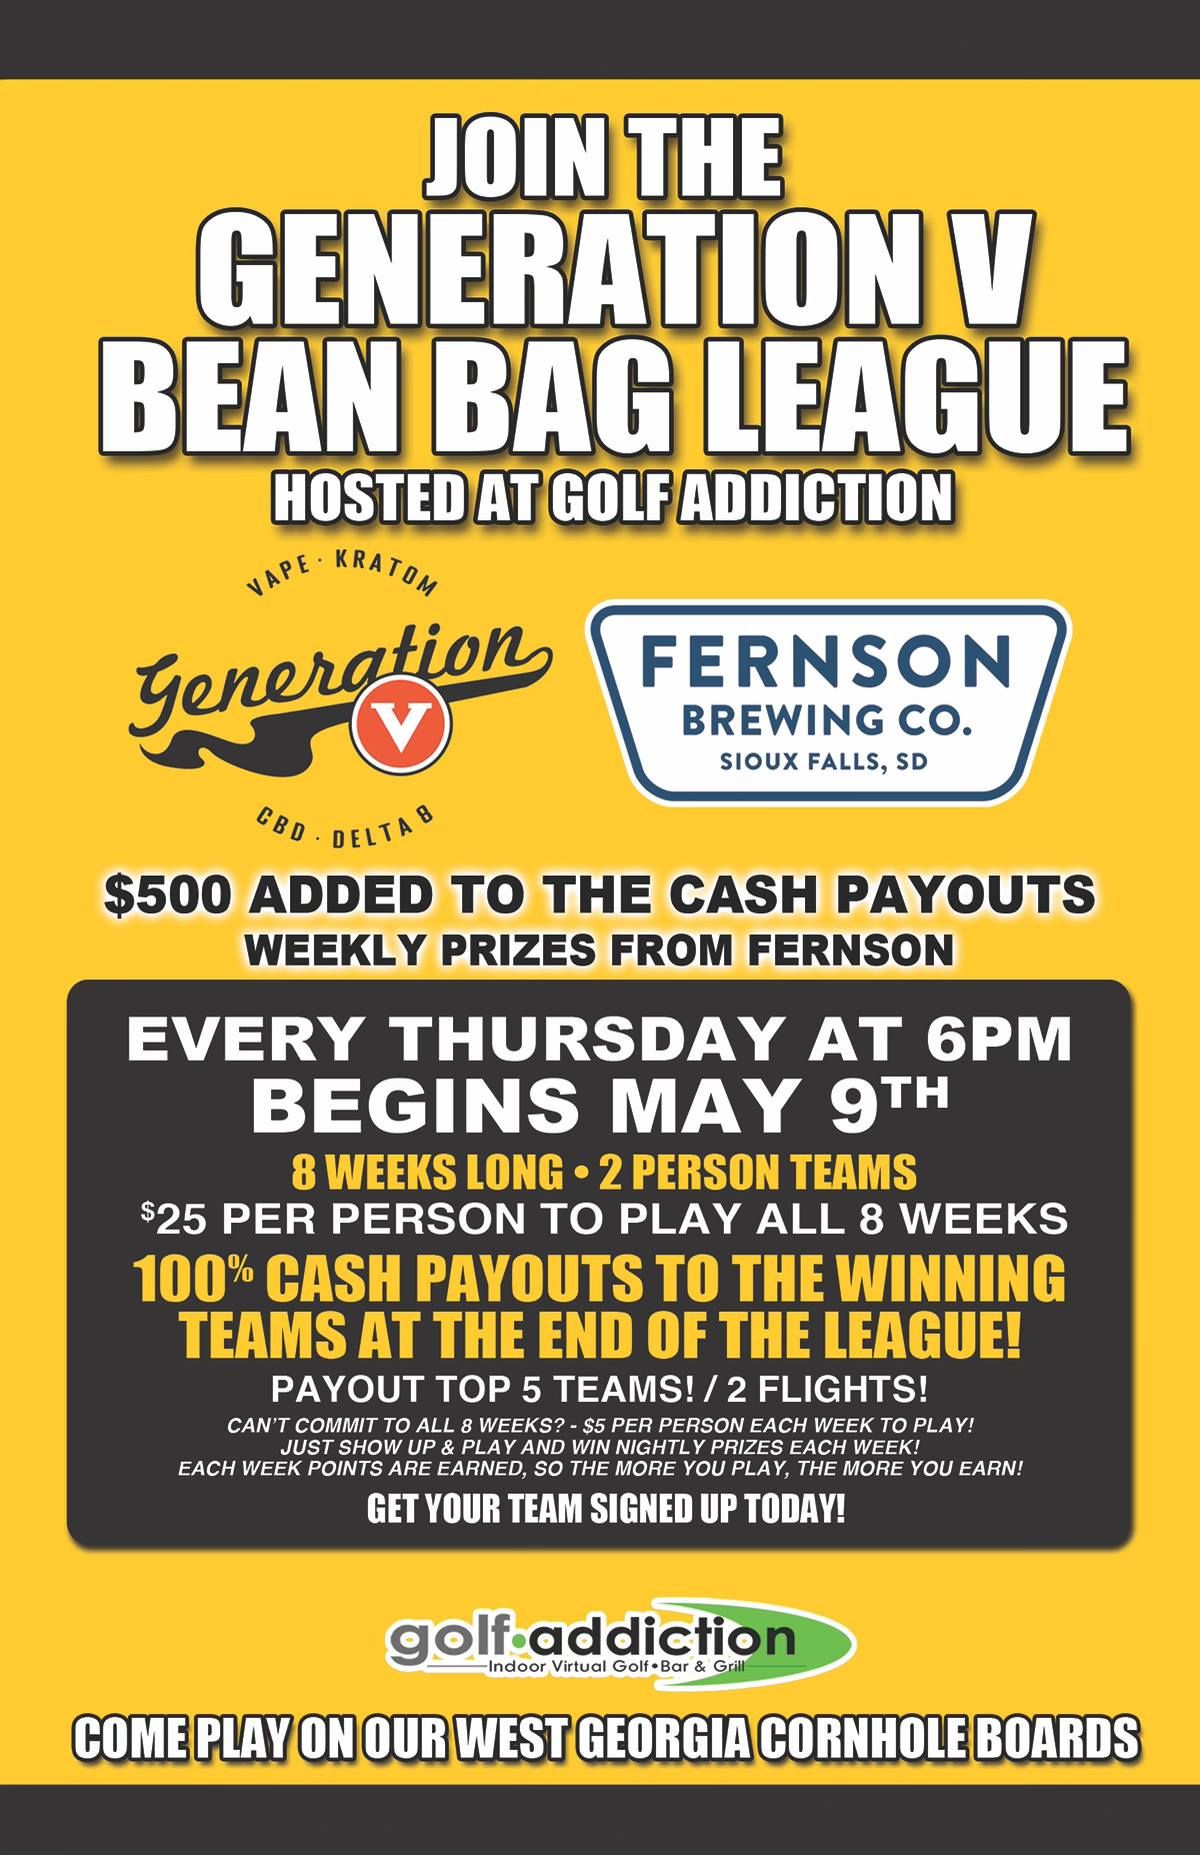 The Generation V Bean Bag League